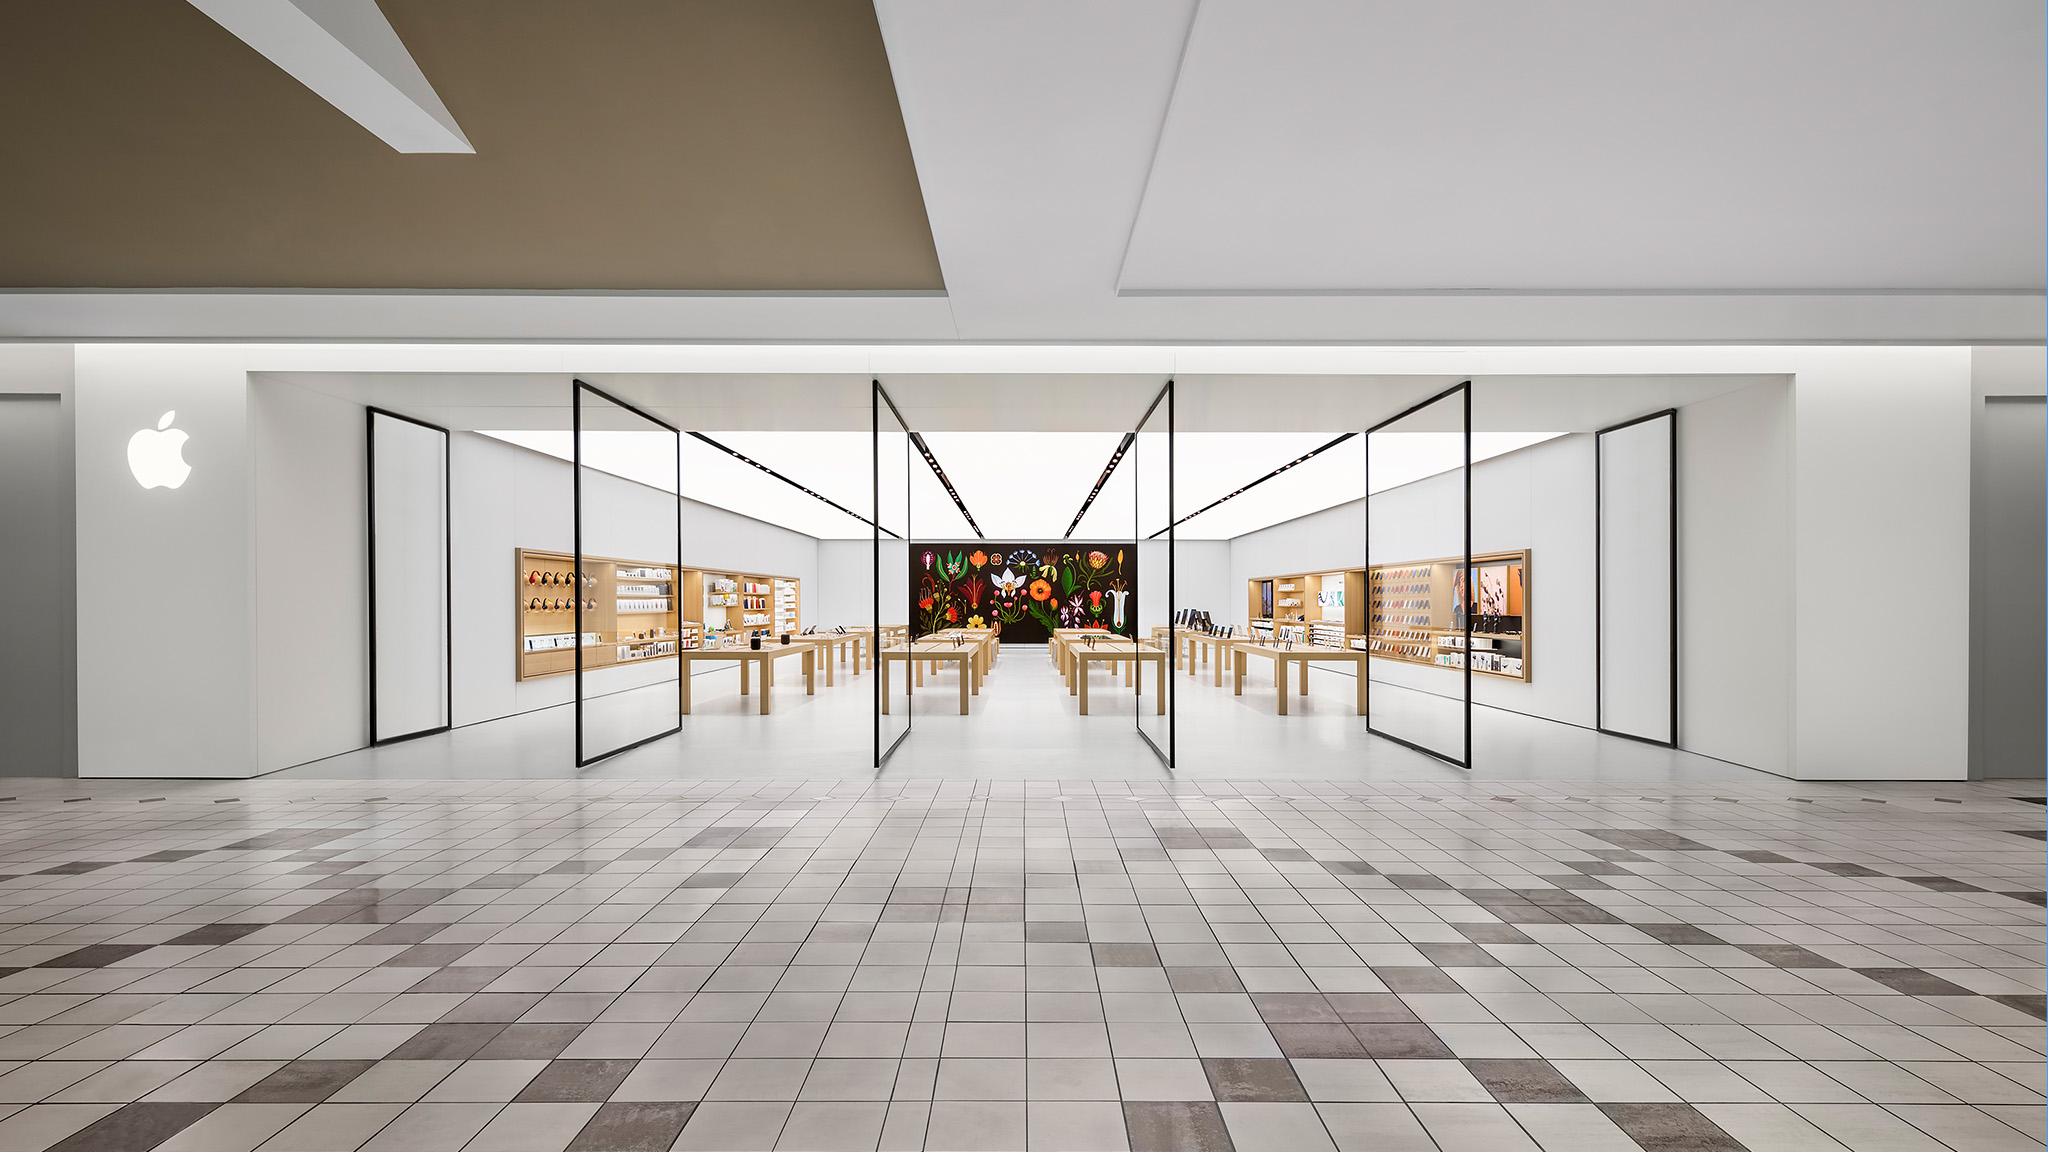 Victoria Gardens - Apple Store - Apple